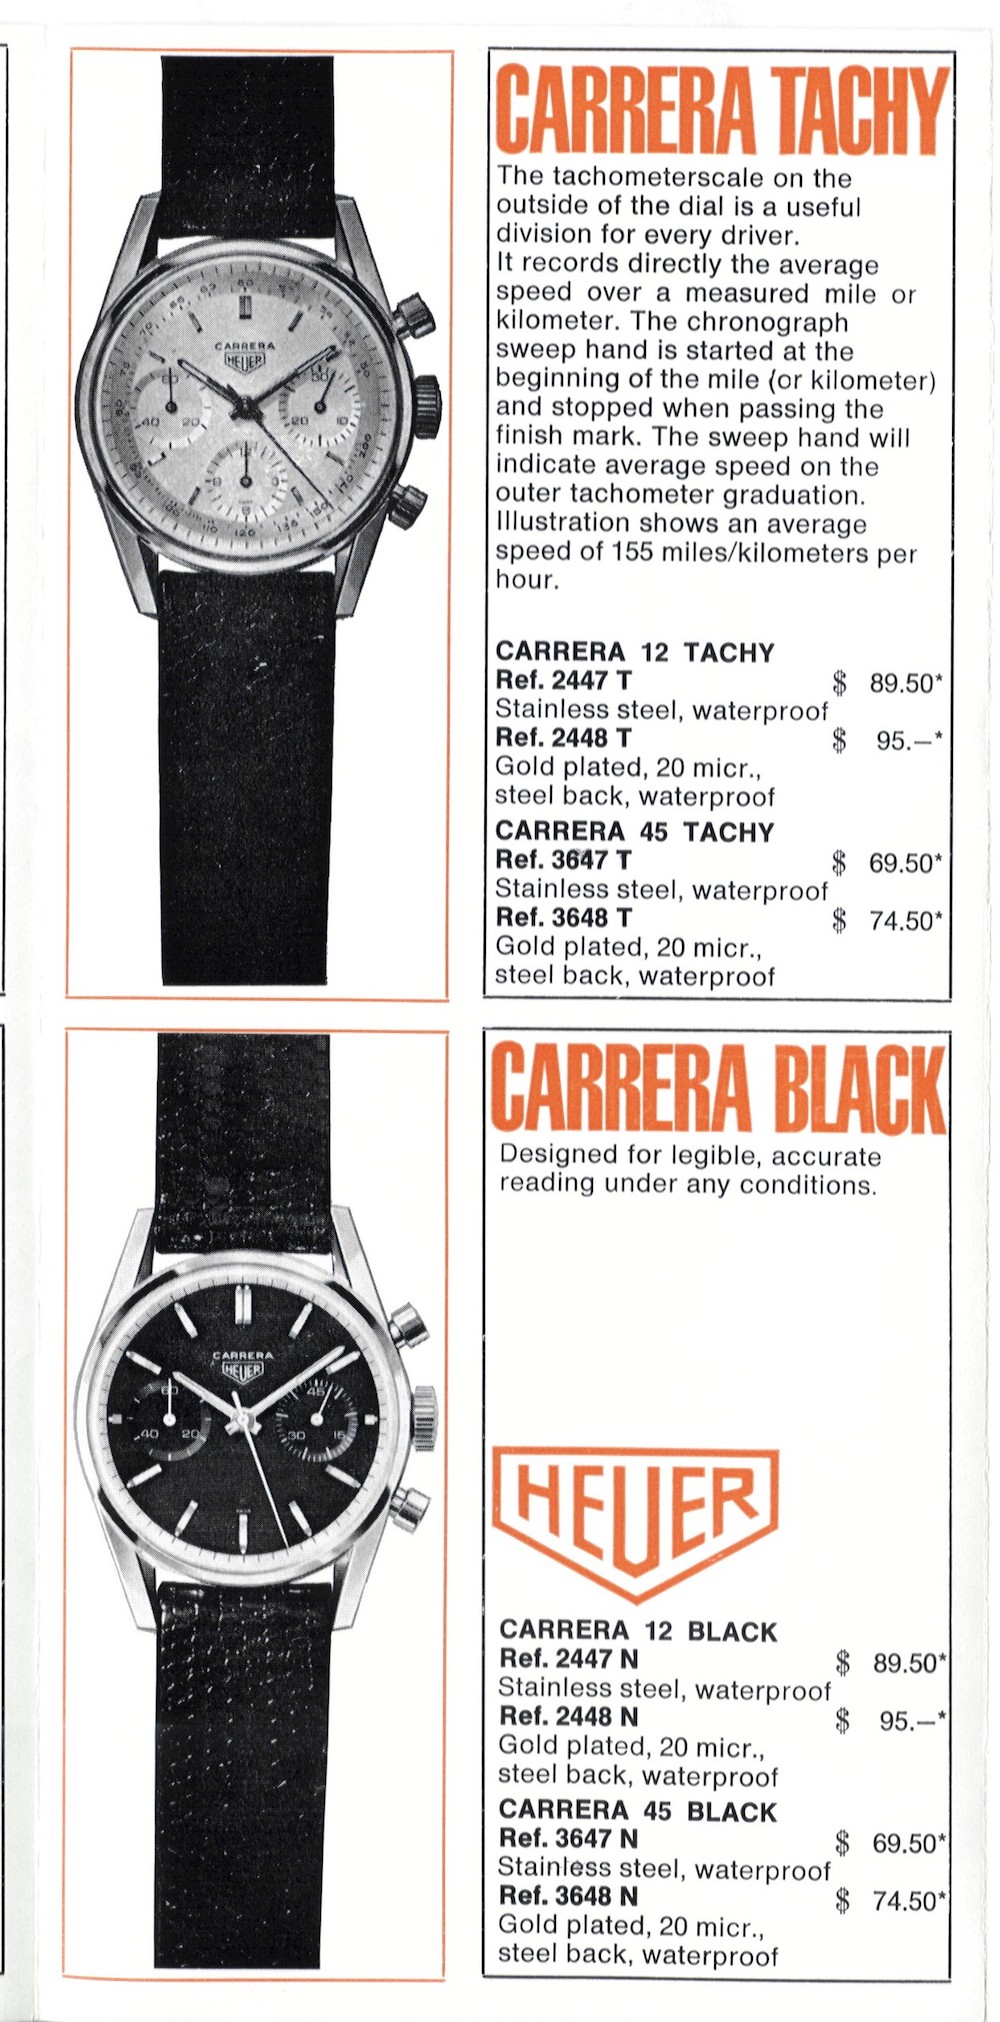 1964 Heuer Carrera ads - 2